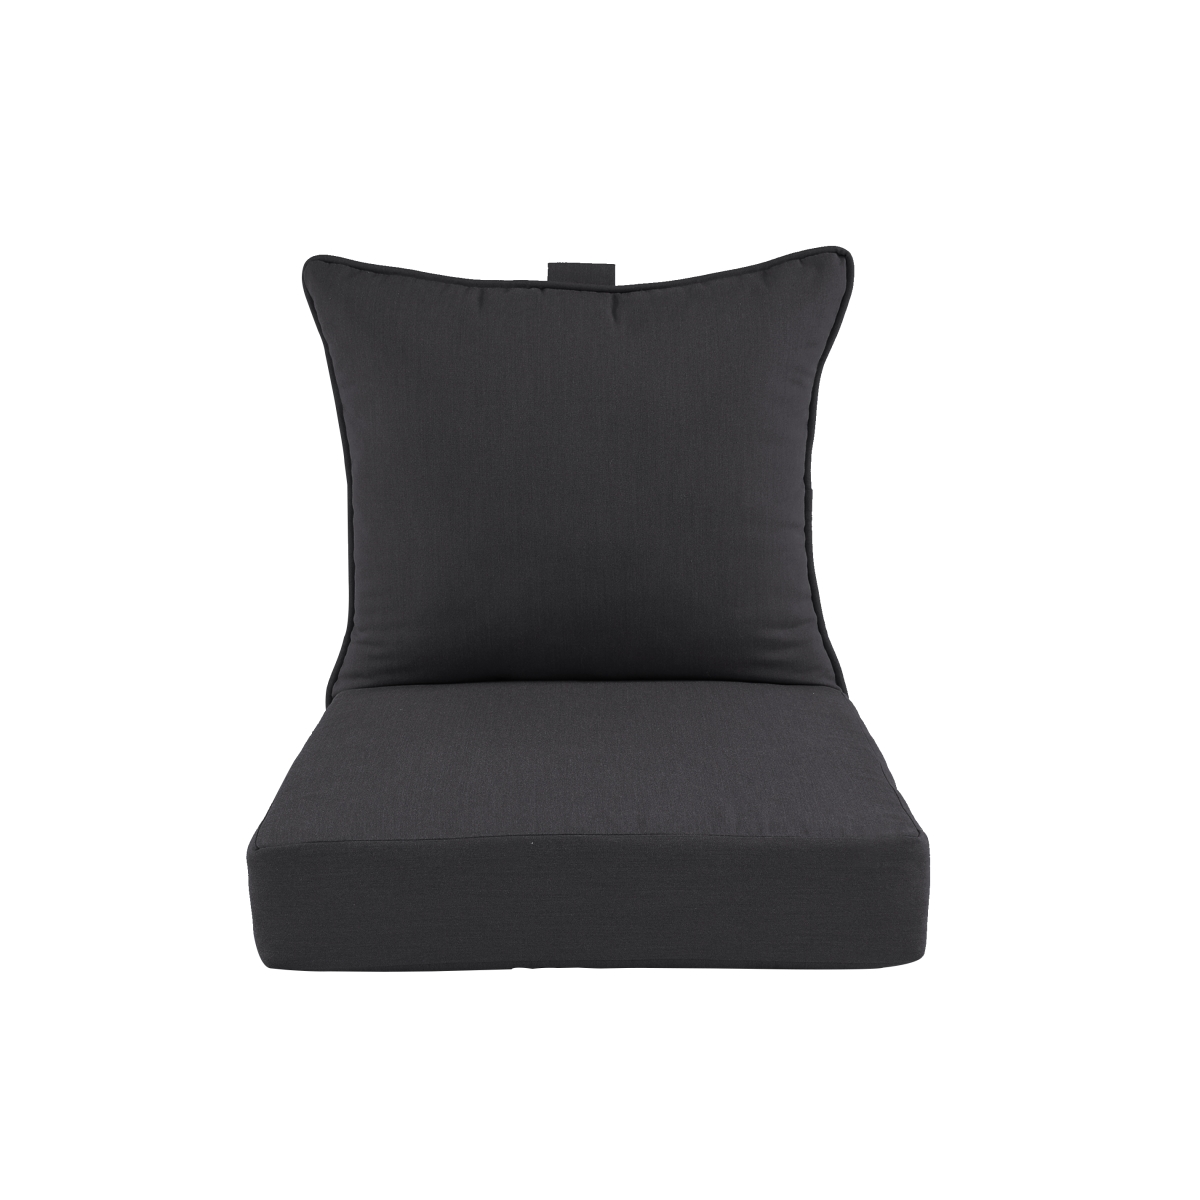 Cuds46-sda48 46.5 X 24 In. Pacifica Premium Deep Seat Lounge Cushion In Slate